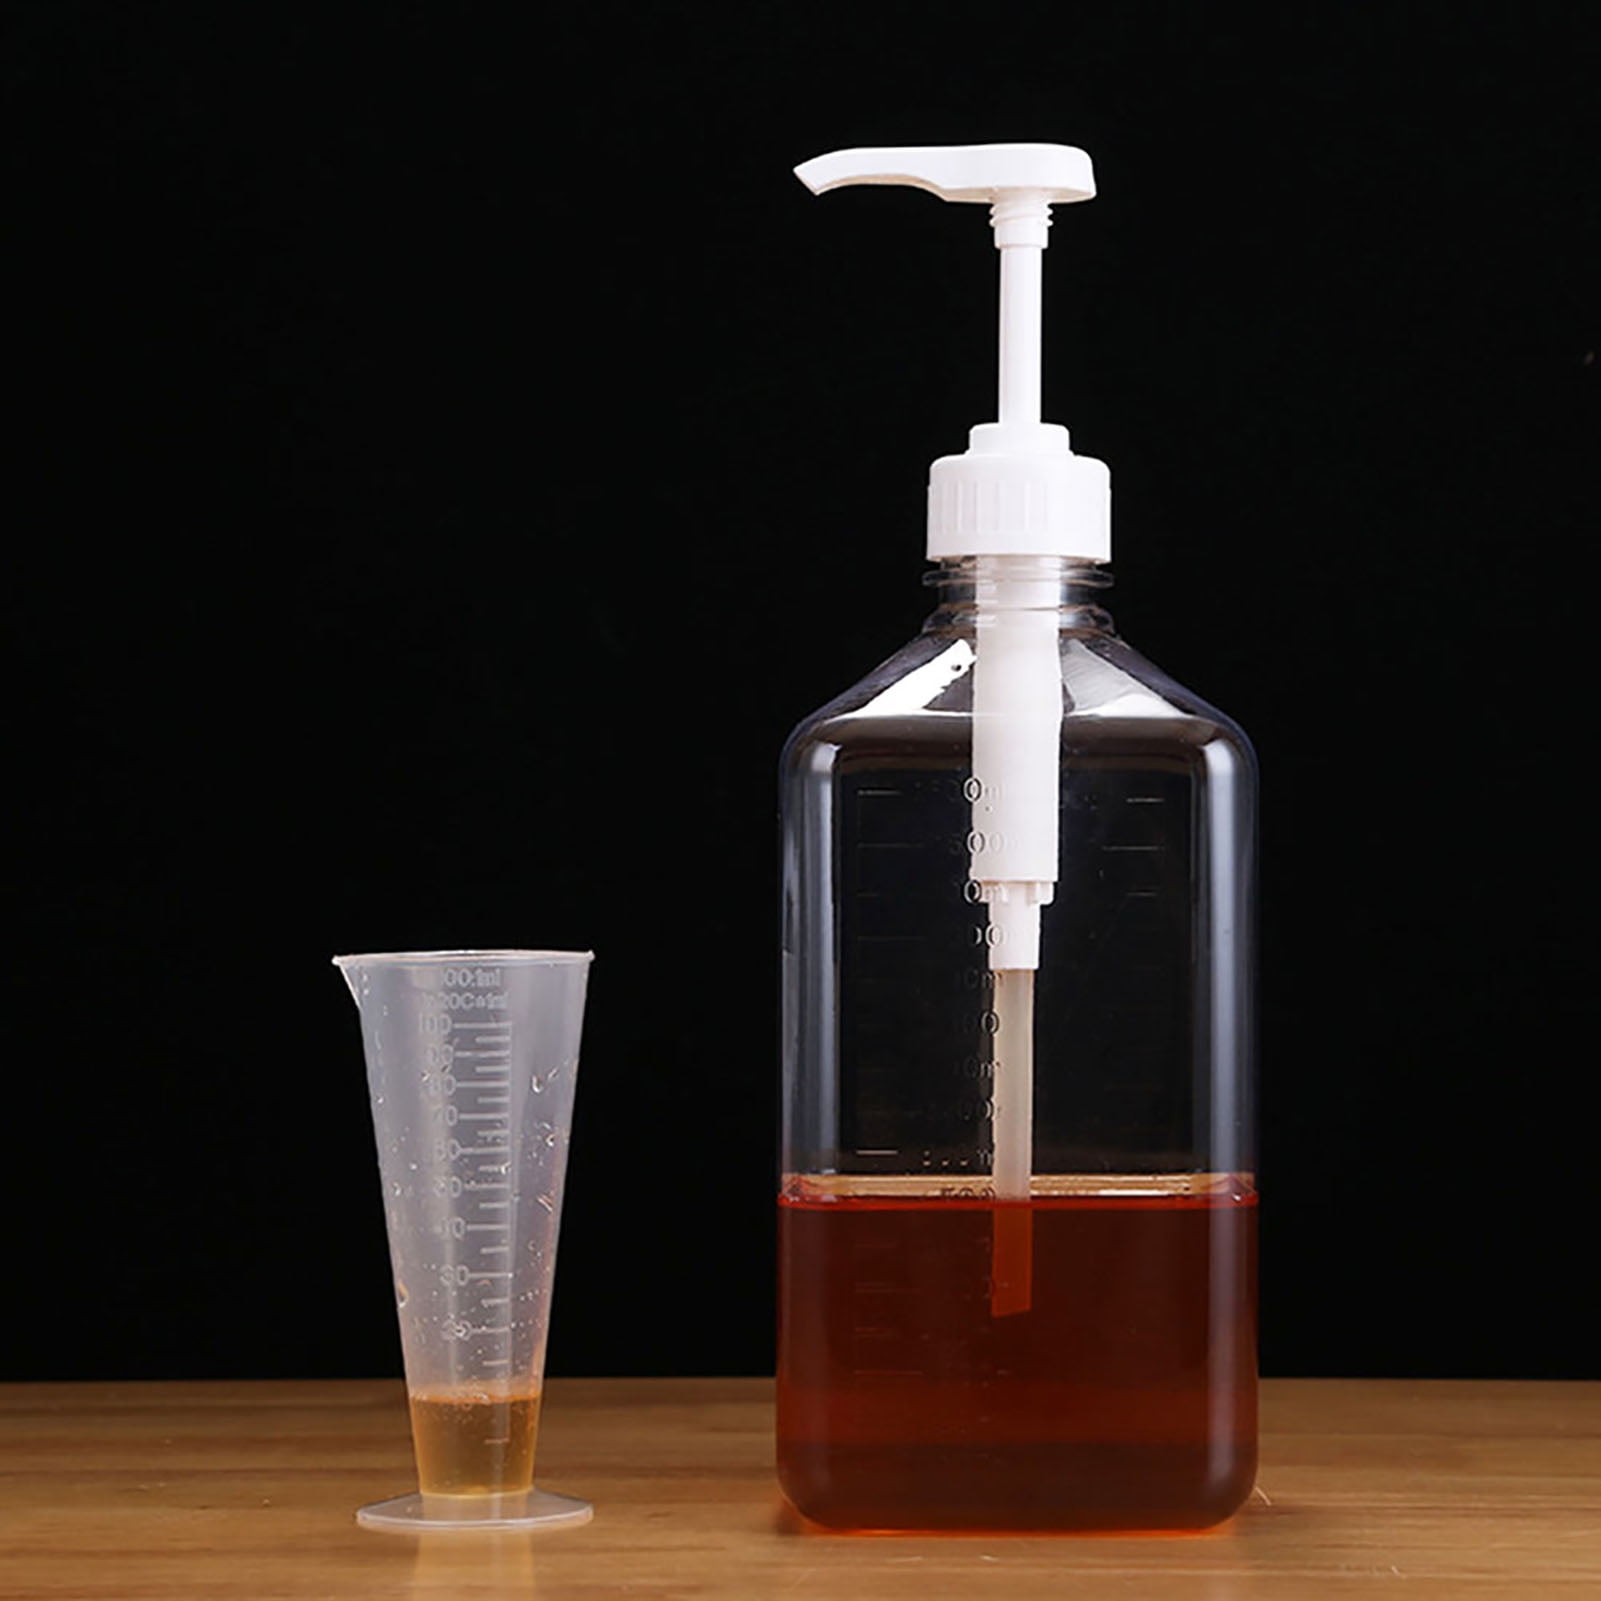 5x Plastic Syrup Juice Pump Dispenser Pump Head Kitchen Table Accessory 